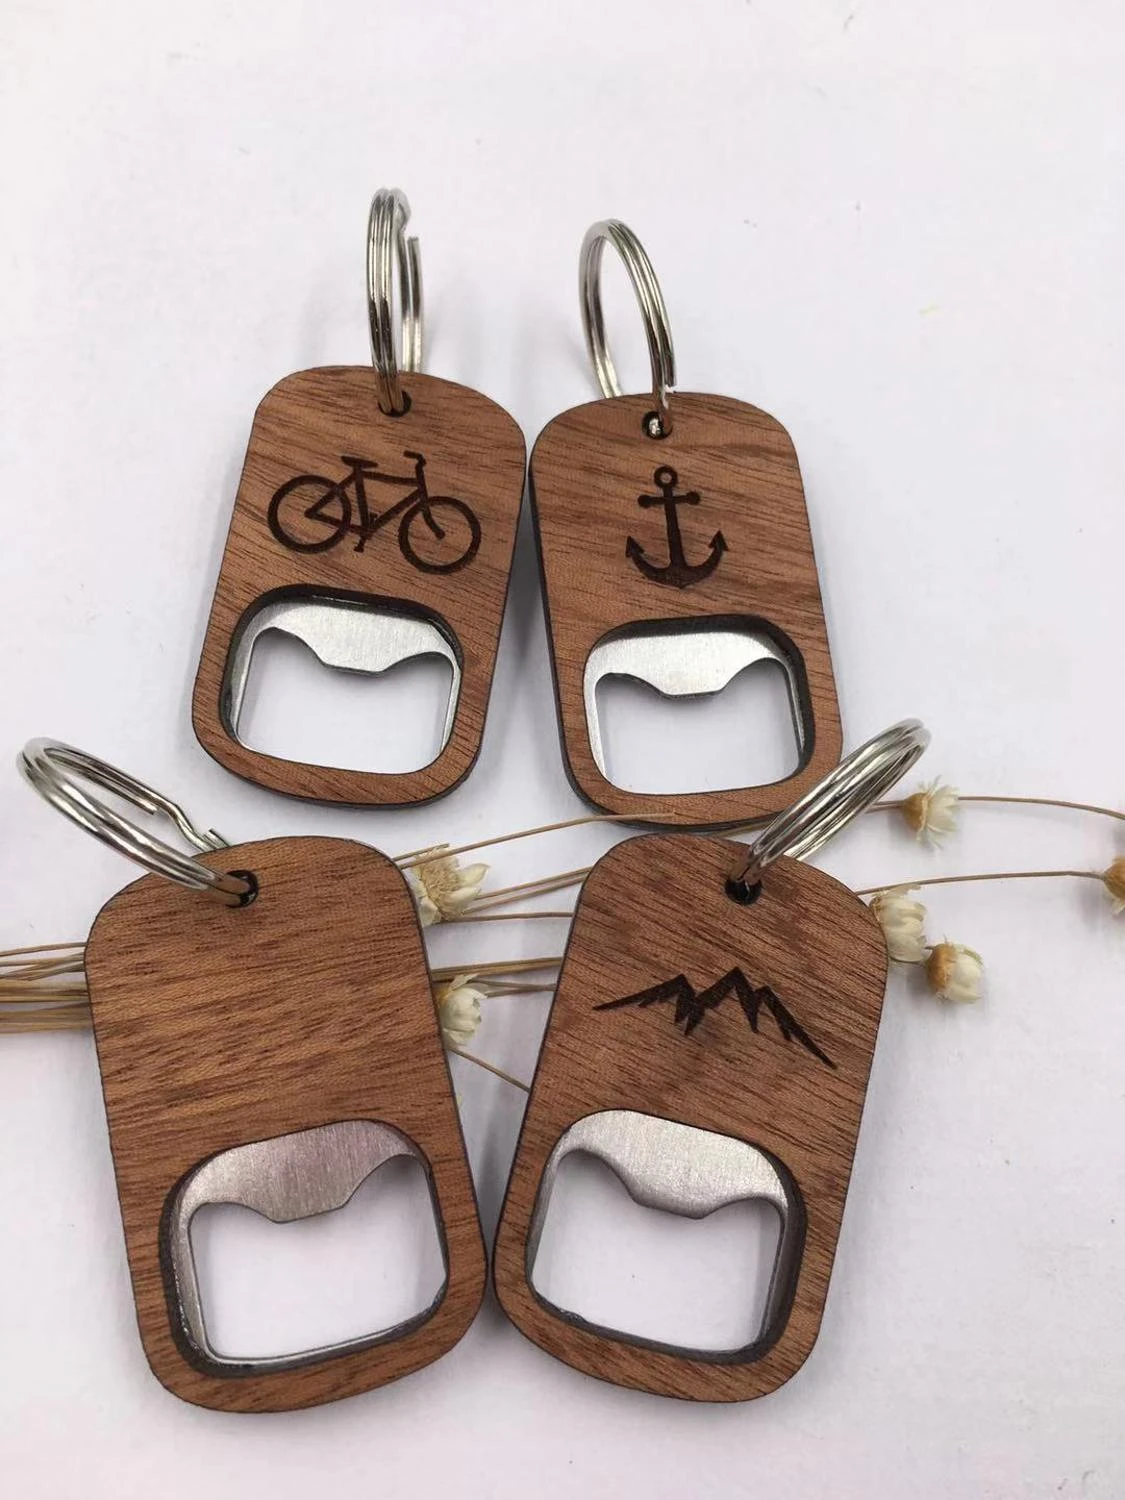 Wooden Openers Key Chain Mountain Deer Bike Anchor Bottle Opener Keychain Wood Gifts Beer Accessories